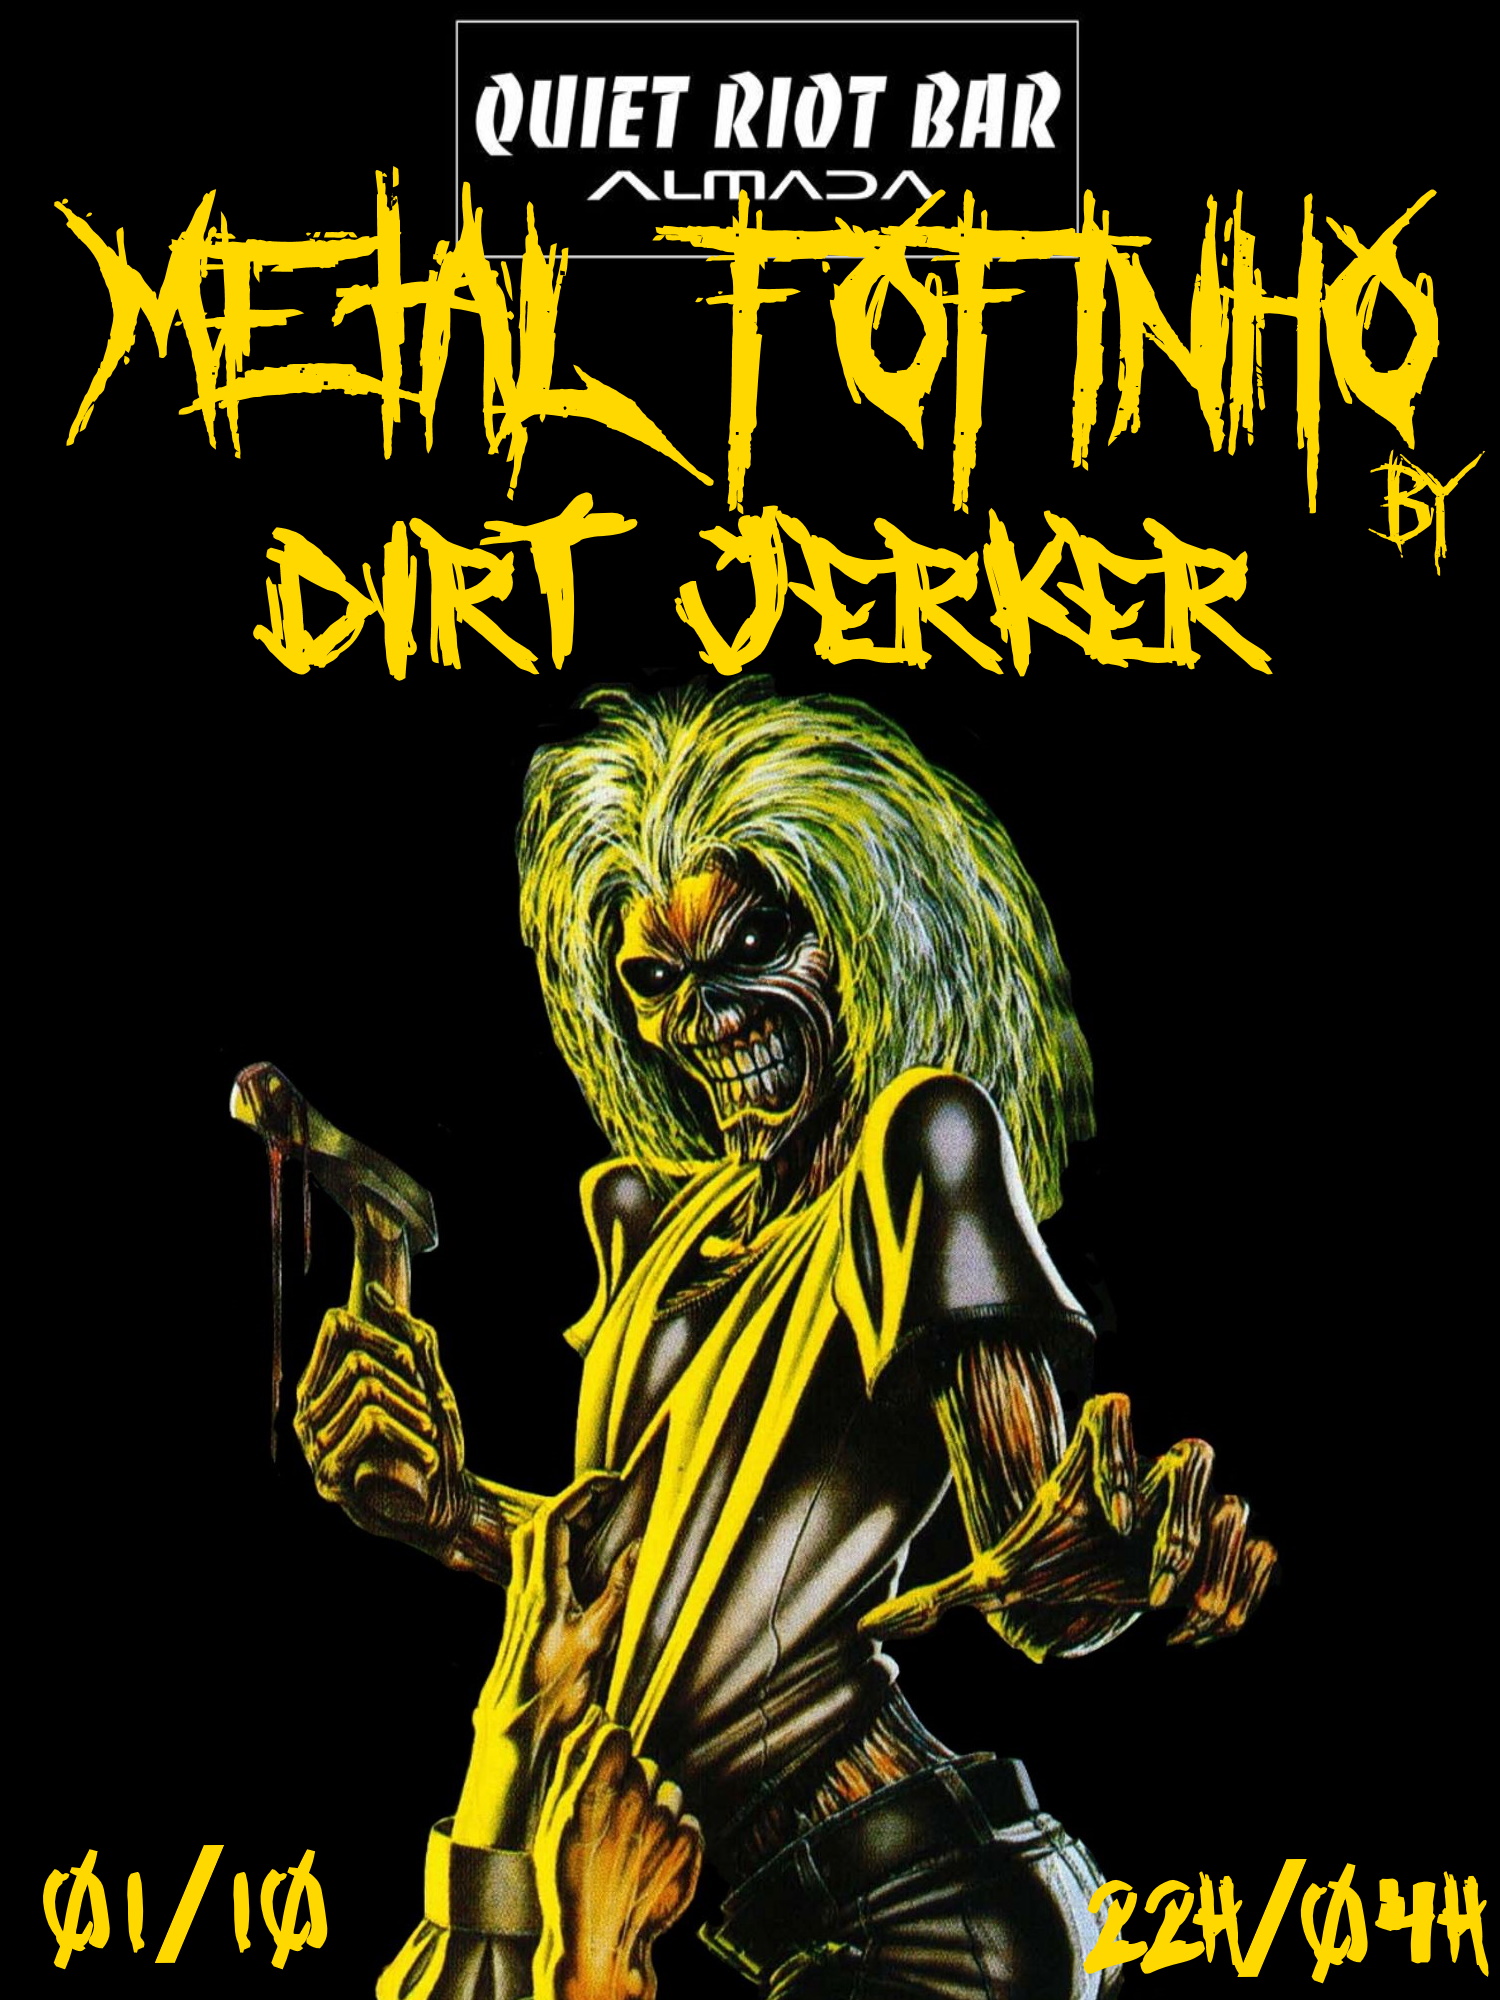 Metal Fofifnho by Dirt Jerker @ Quiet Riot Bar